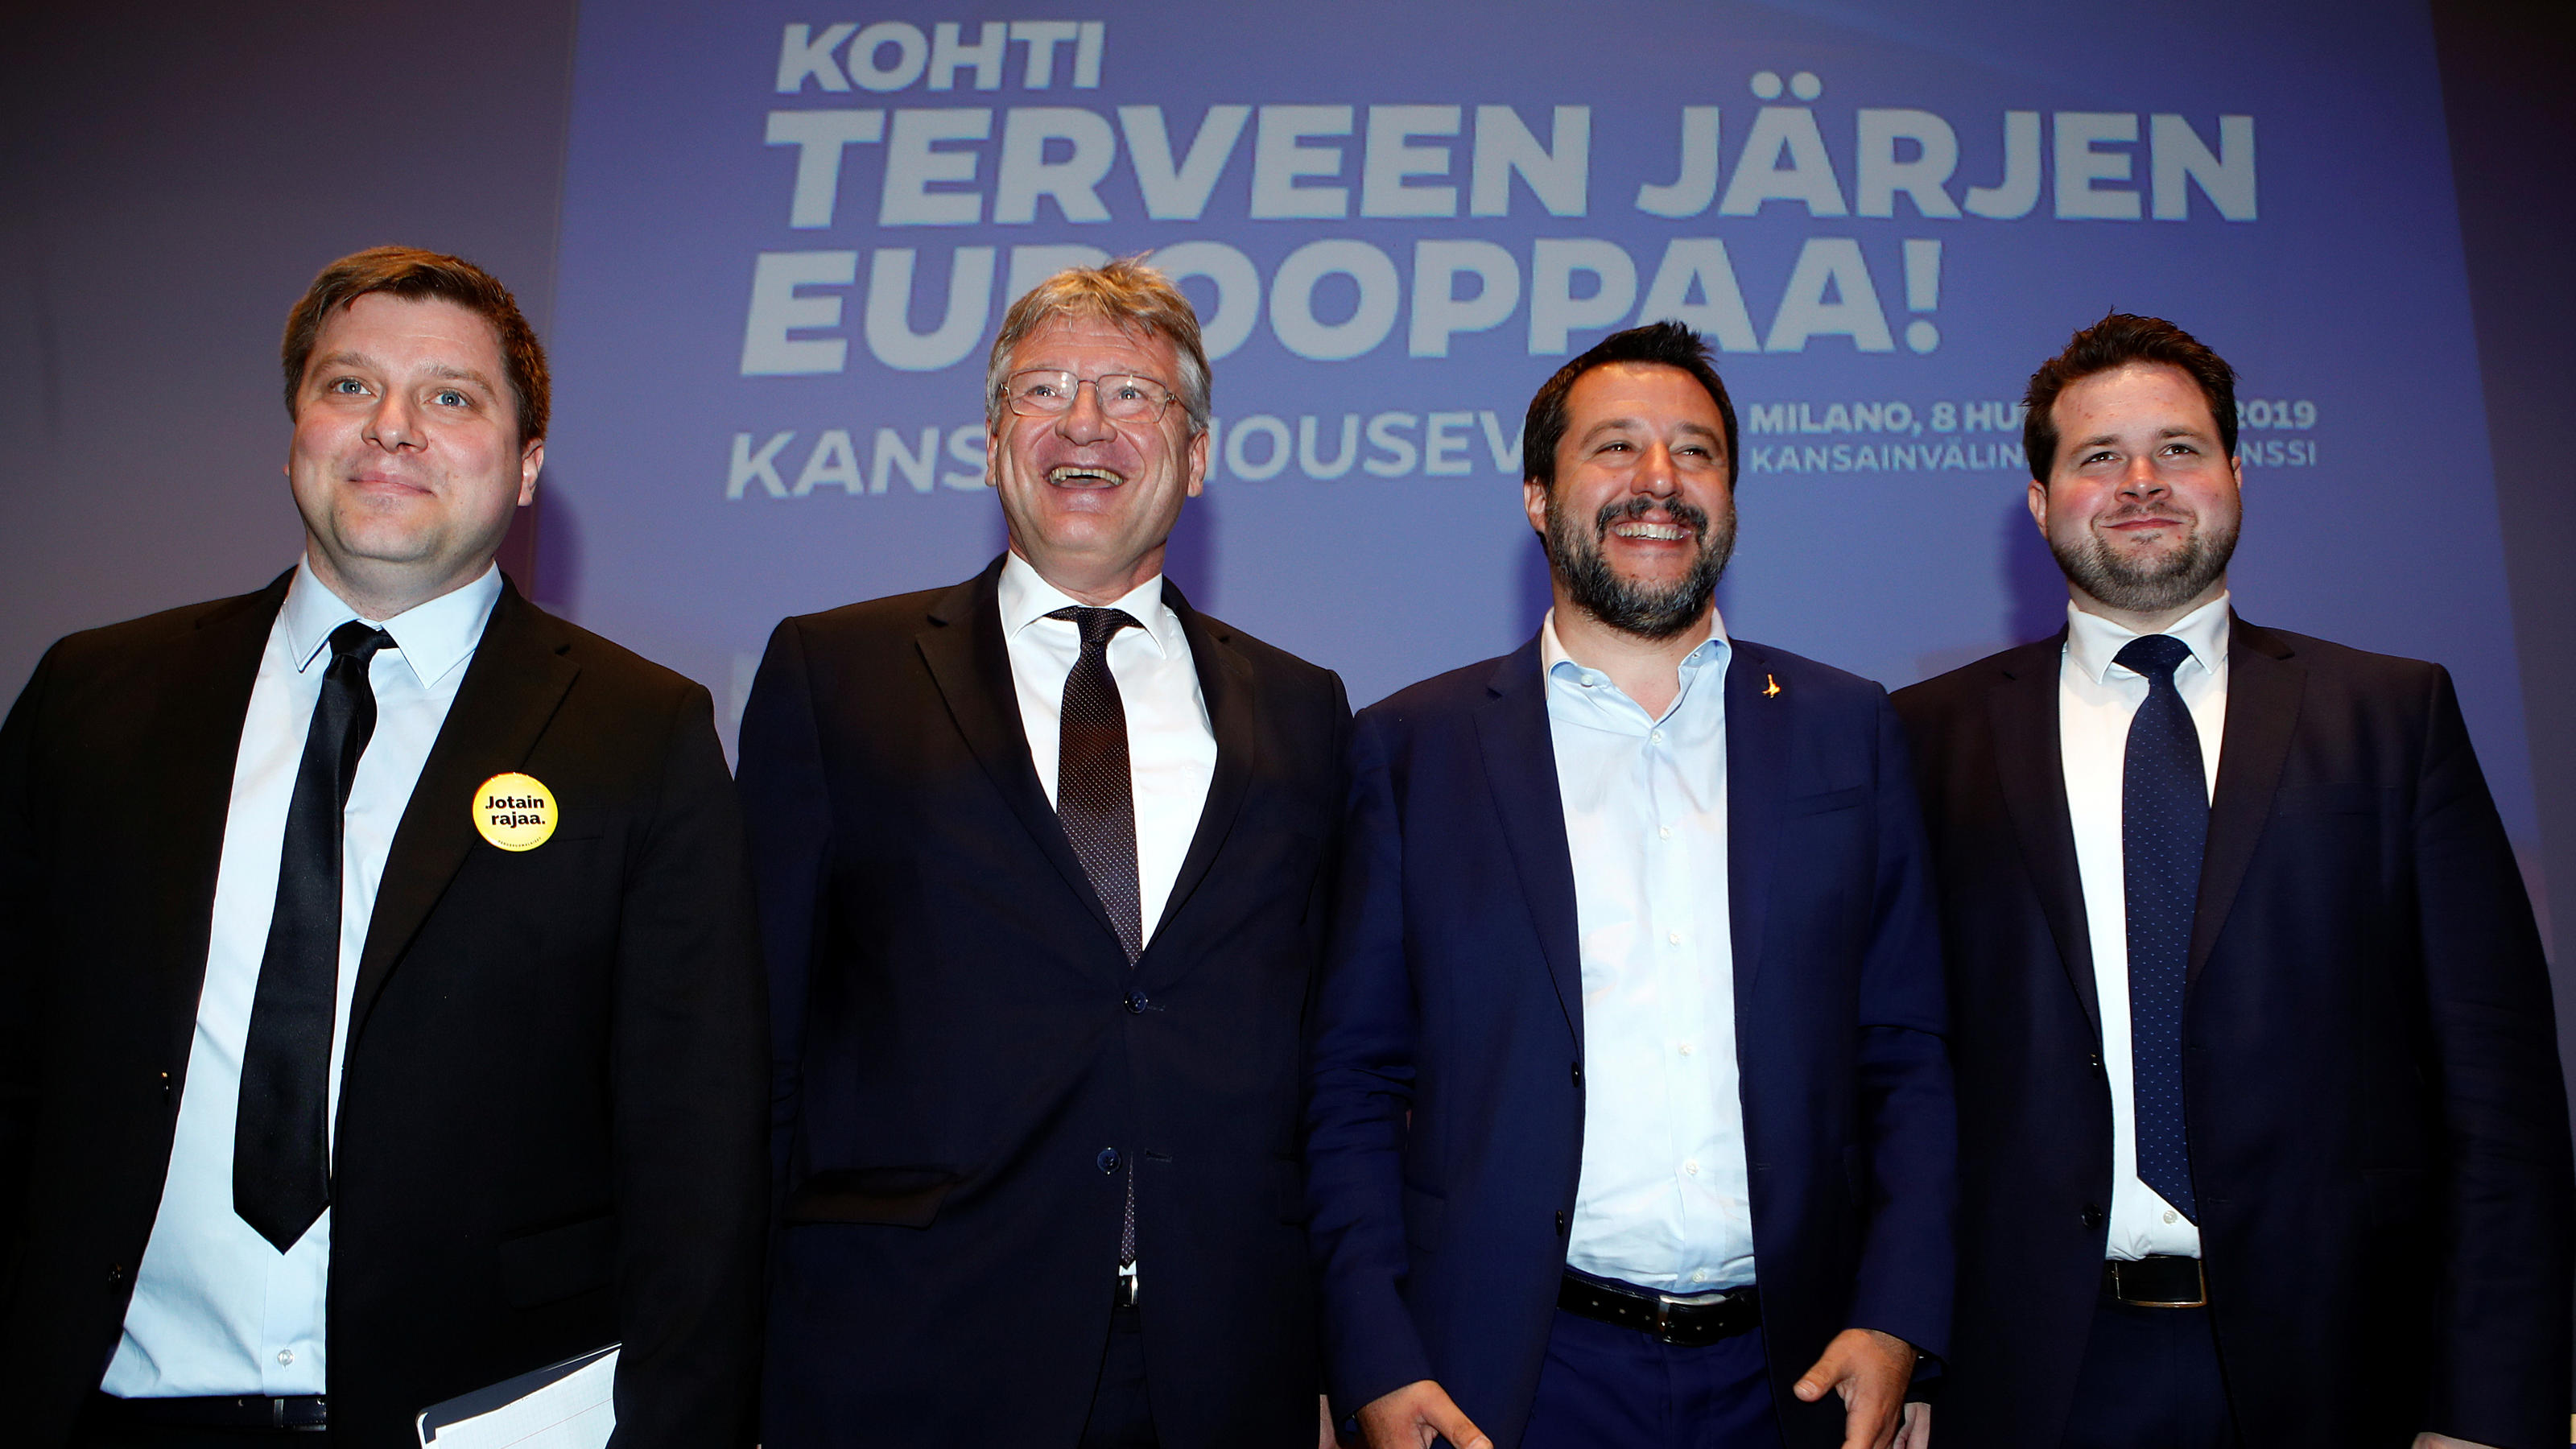 Italy's Deputy Prime Minister Matteo Salvini poses with Olli Kotro, Joerg Meuthen, Anders Vistisen